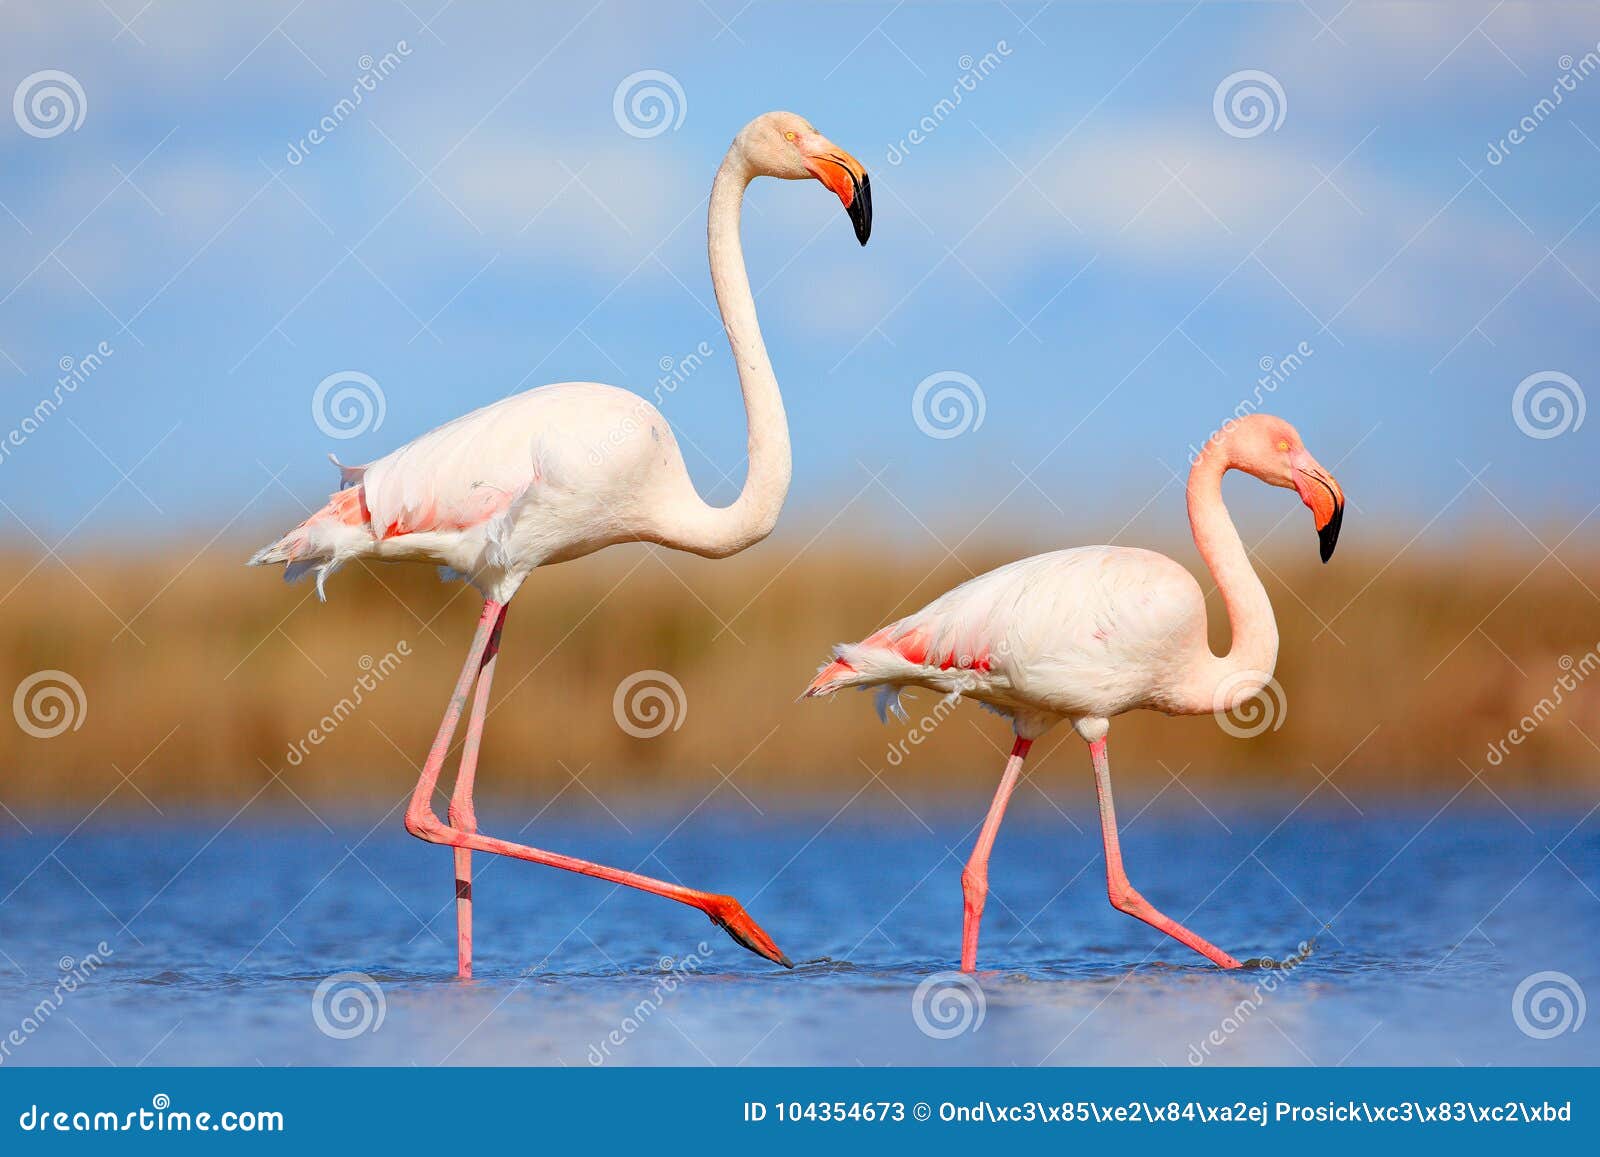 pair of flamingos. bird love in blue water. two animal, walking in lake. pink big bird greater flamingo, phoenicopterus ruber, in